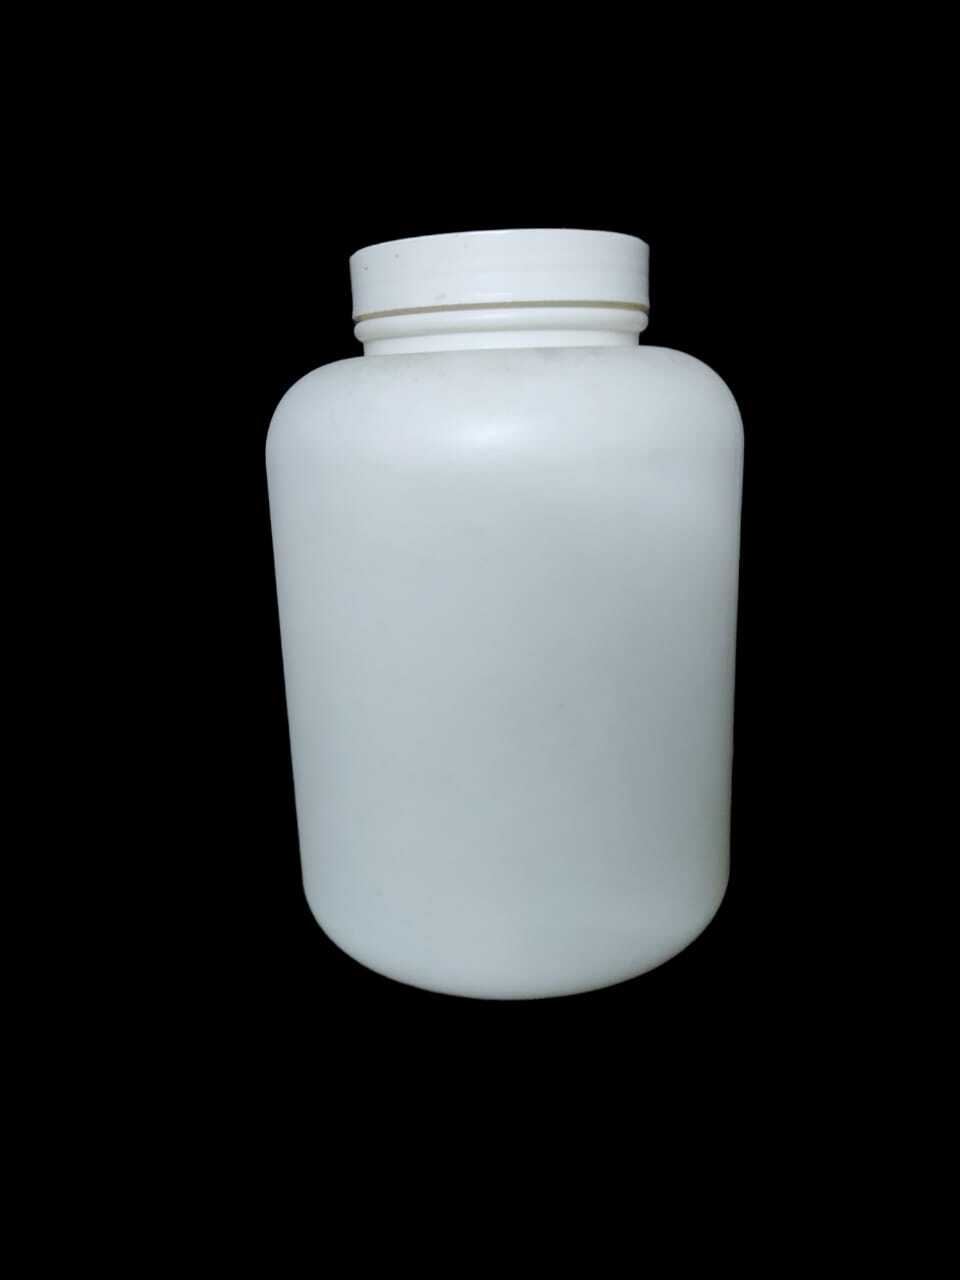 5 Kg Protein Powder Jar